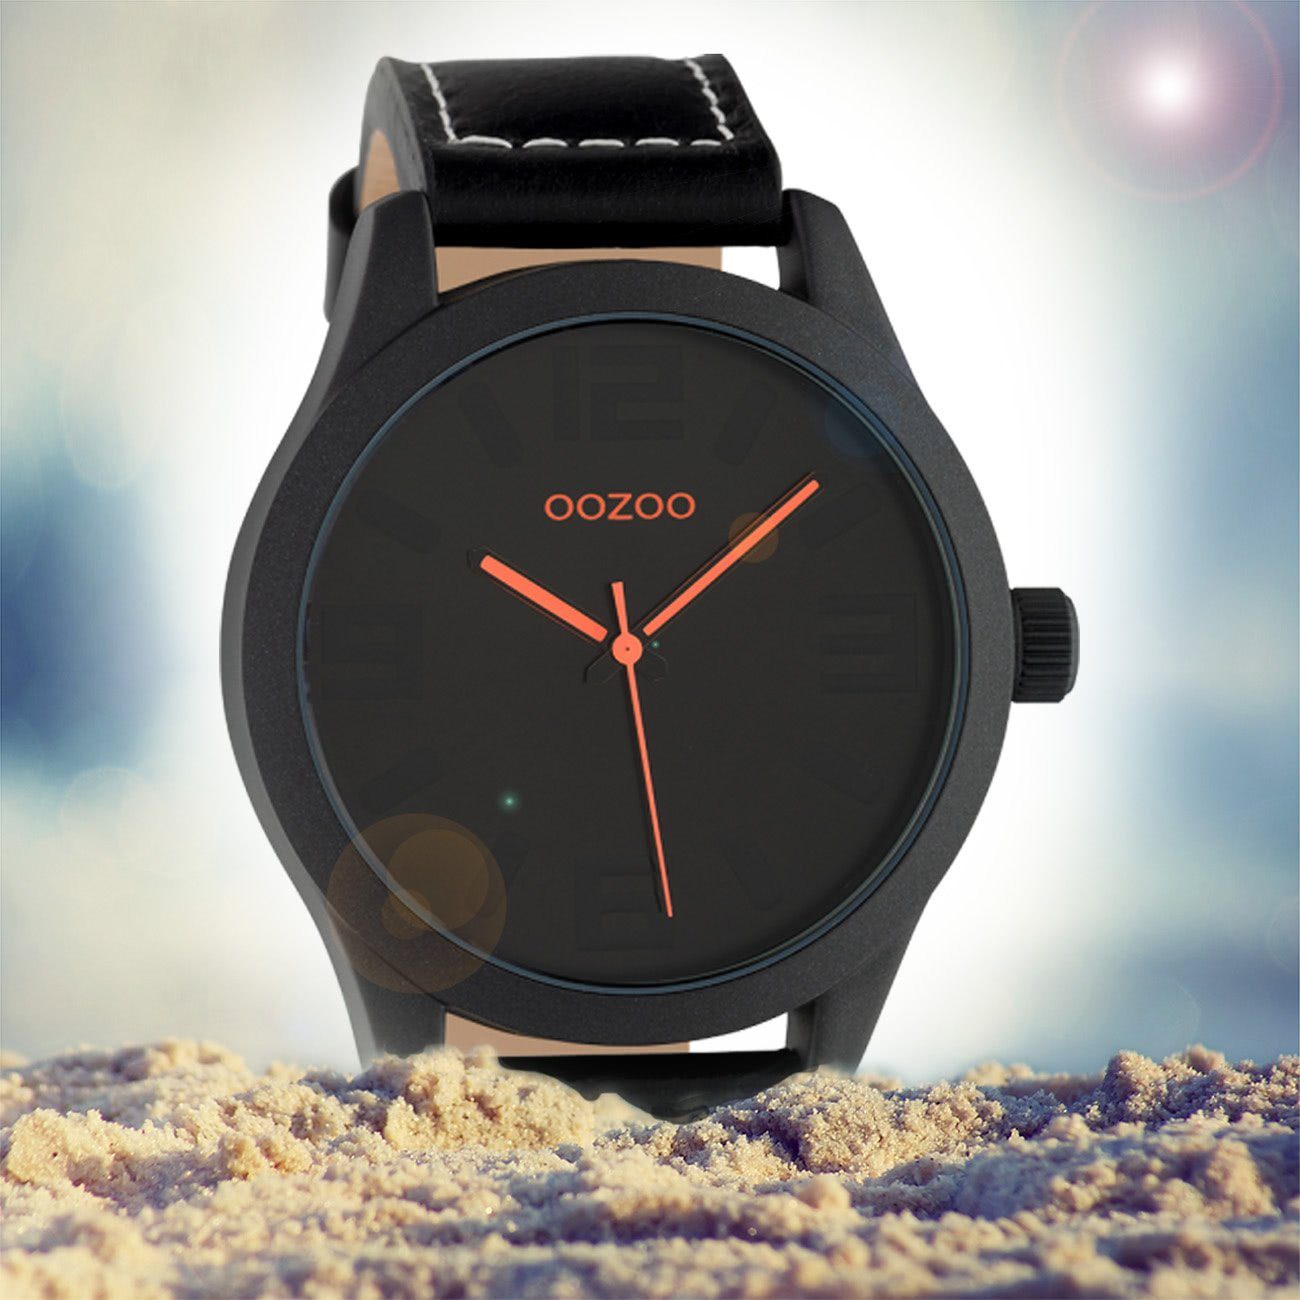 46mm) Analog, Fashion-Style Armbanduhr Herrenuhr groß rund, Quarzuhr OOZOO extra schwarz Lederarmband, Oozoo (ca. Herren